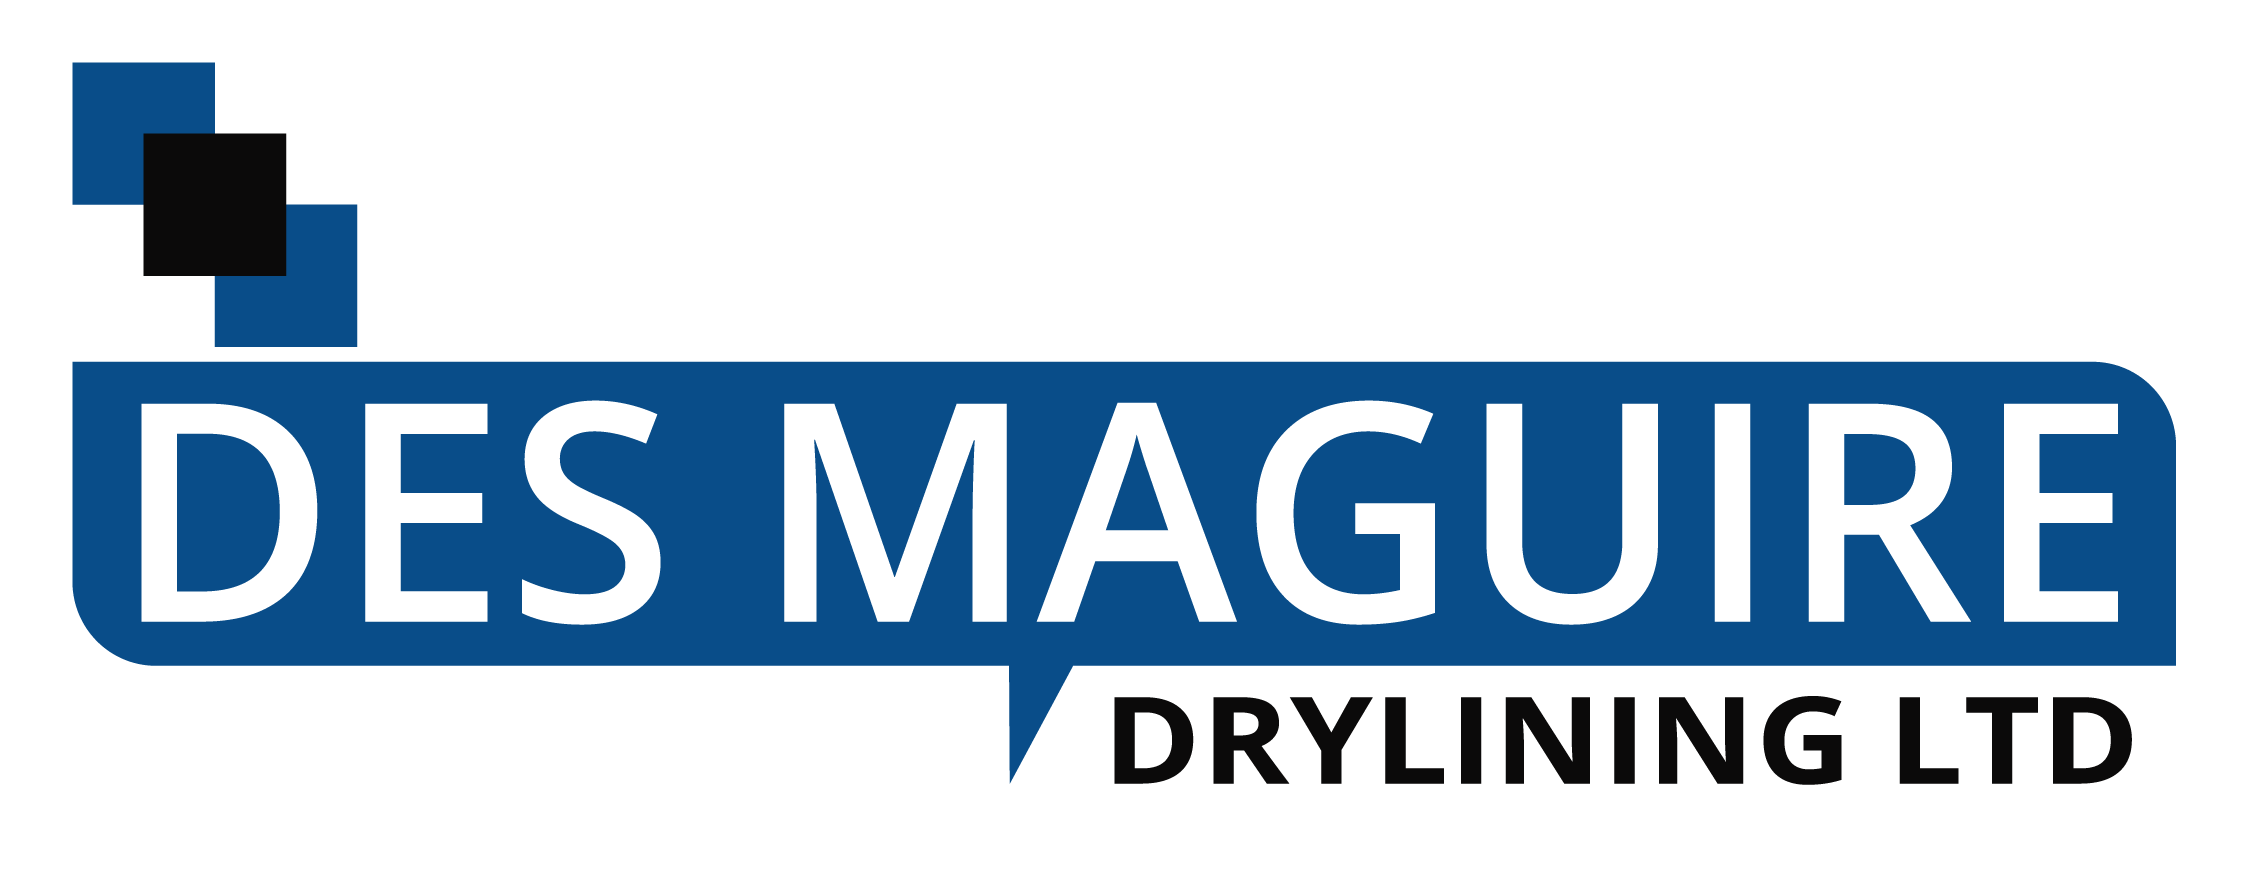 Des Maguire Drylining Ltd